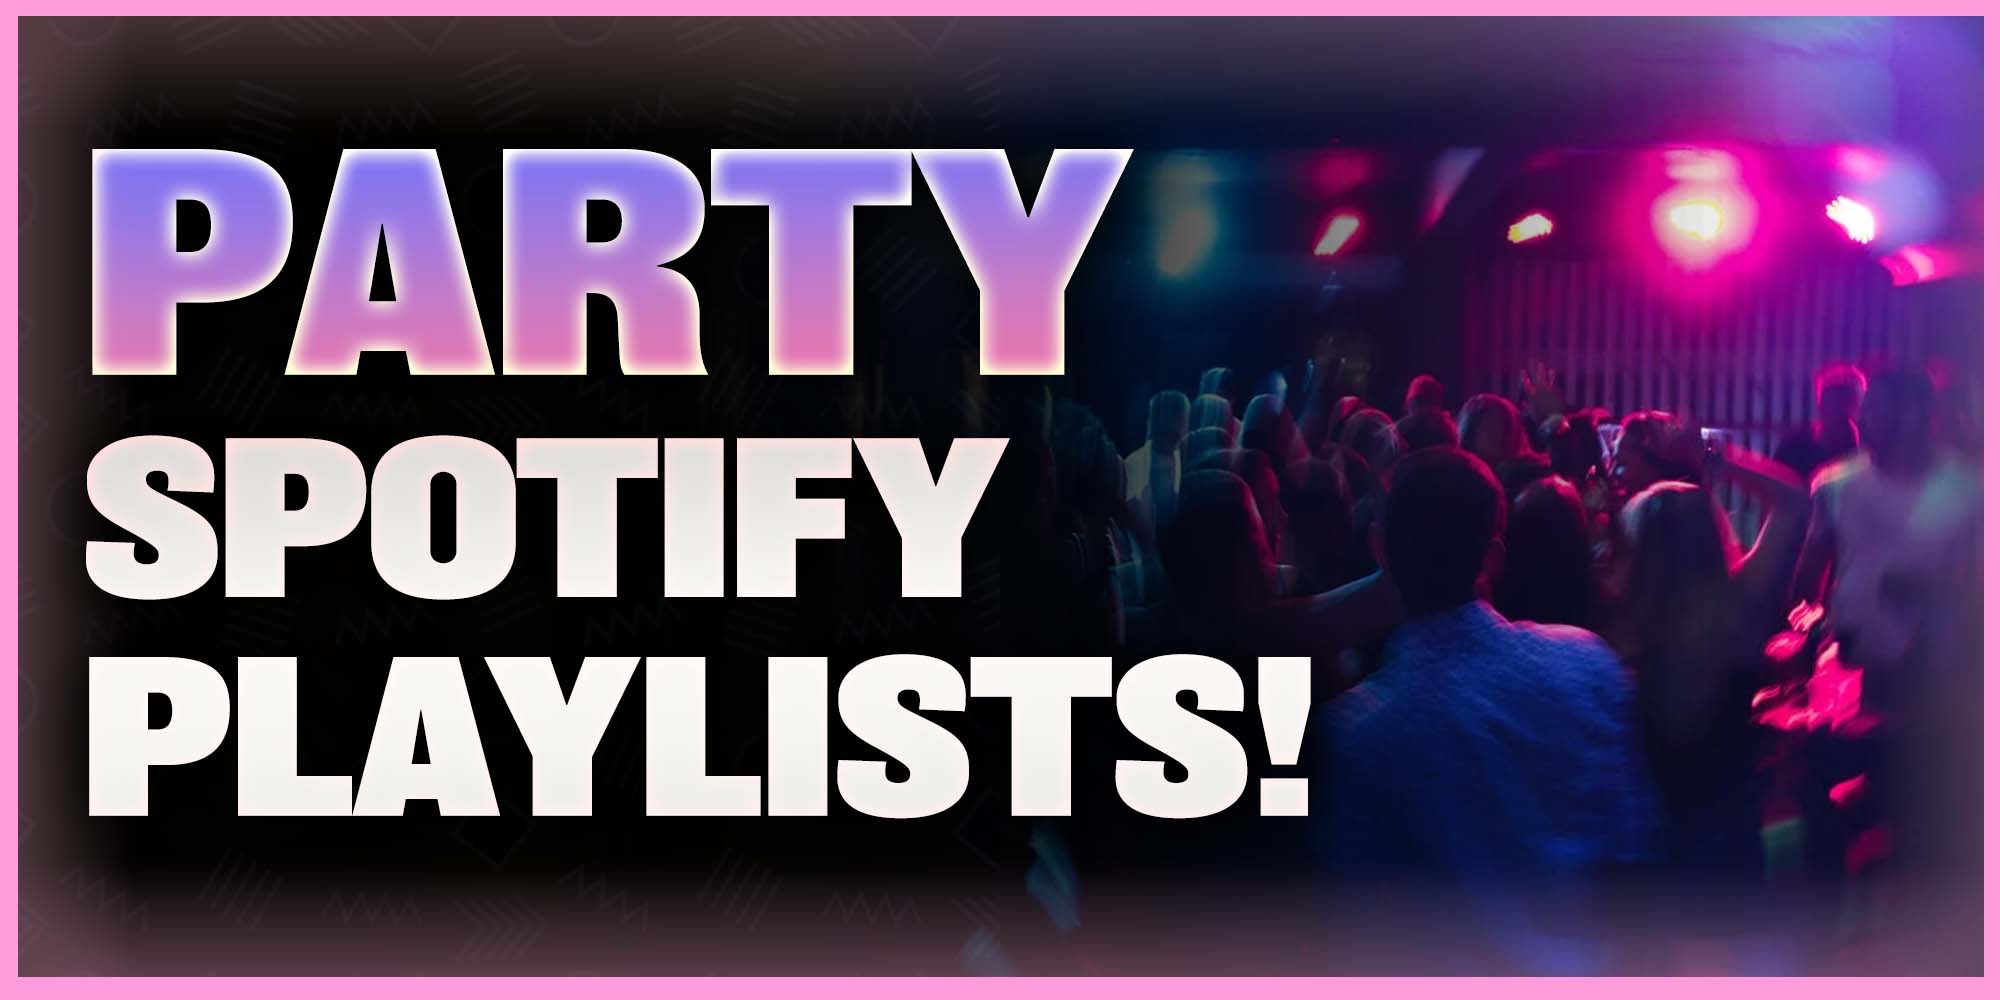 Gummy Bear Radio - playlist by Spotify